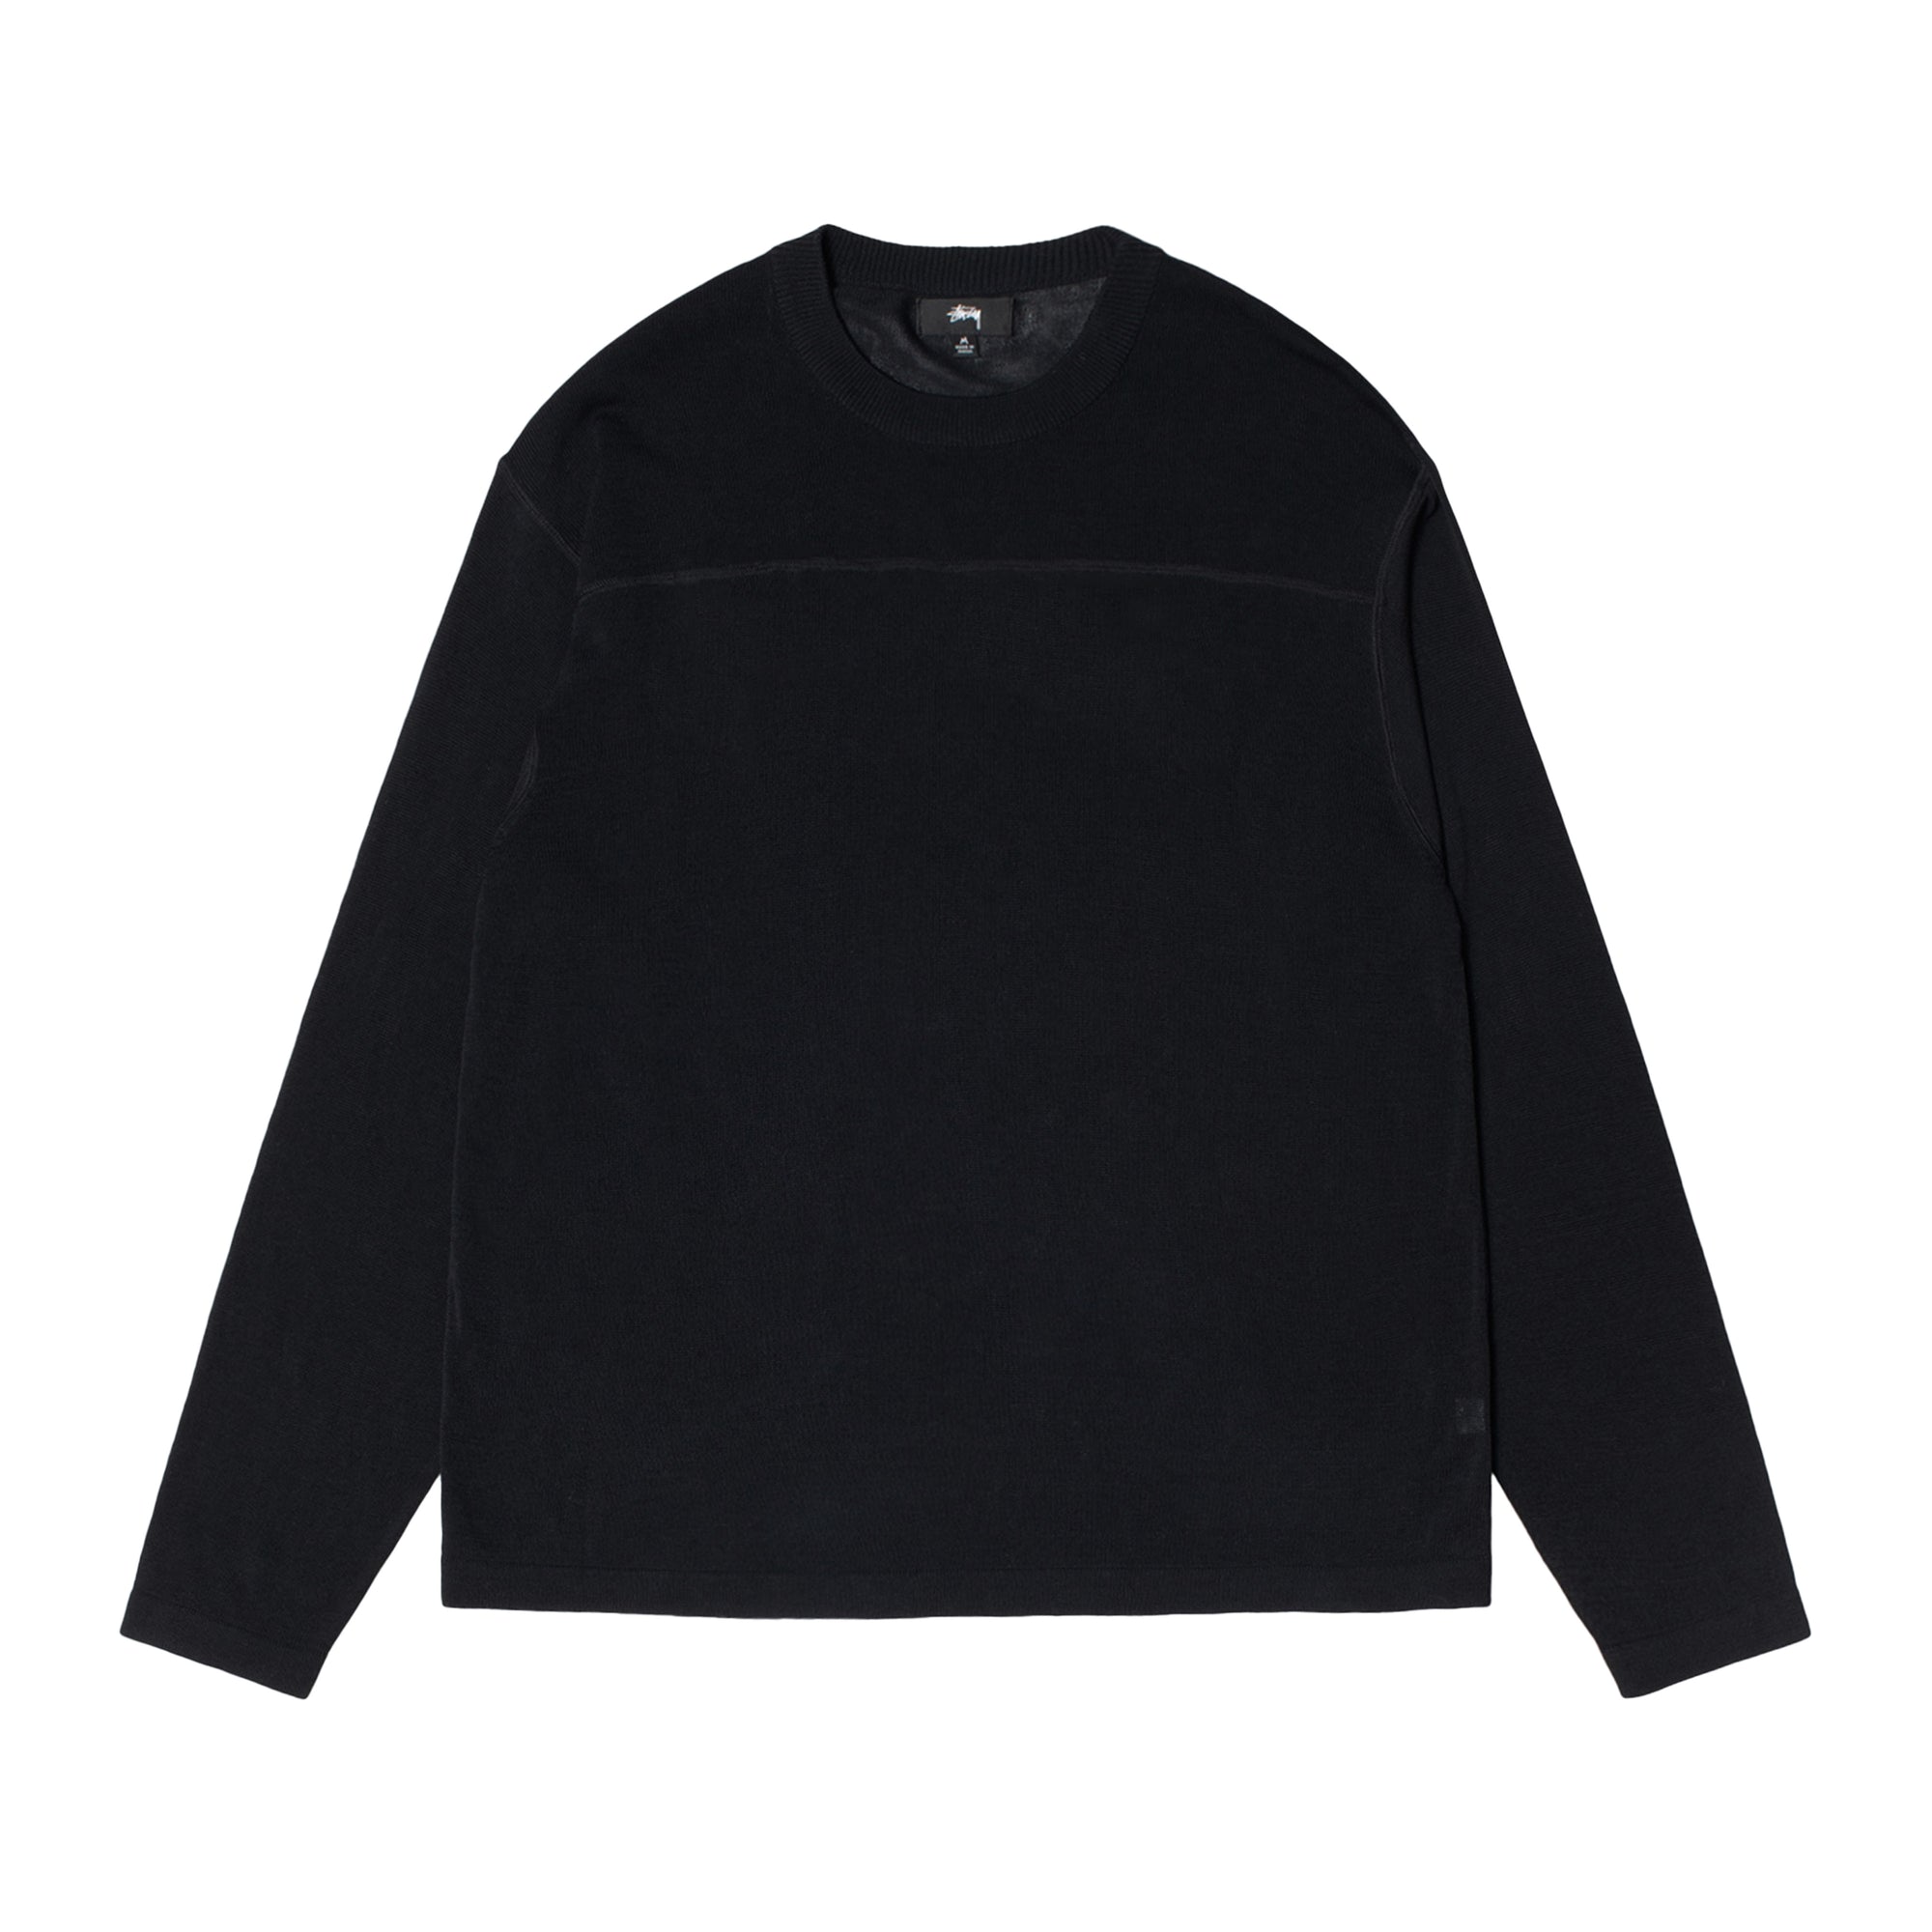 Stüssy - Football Sweater - (Black) view 1